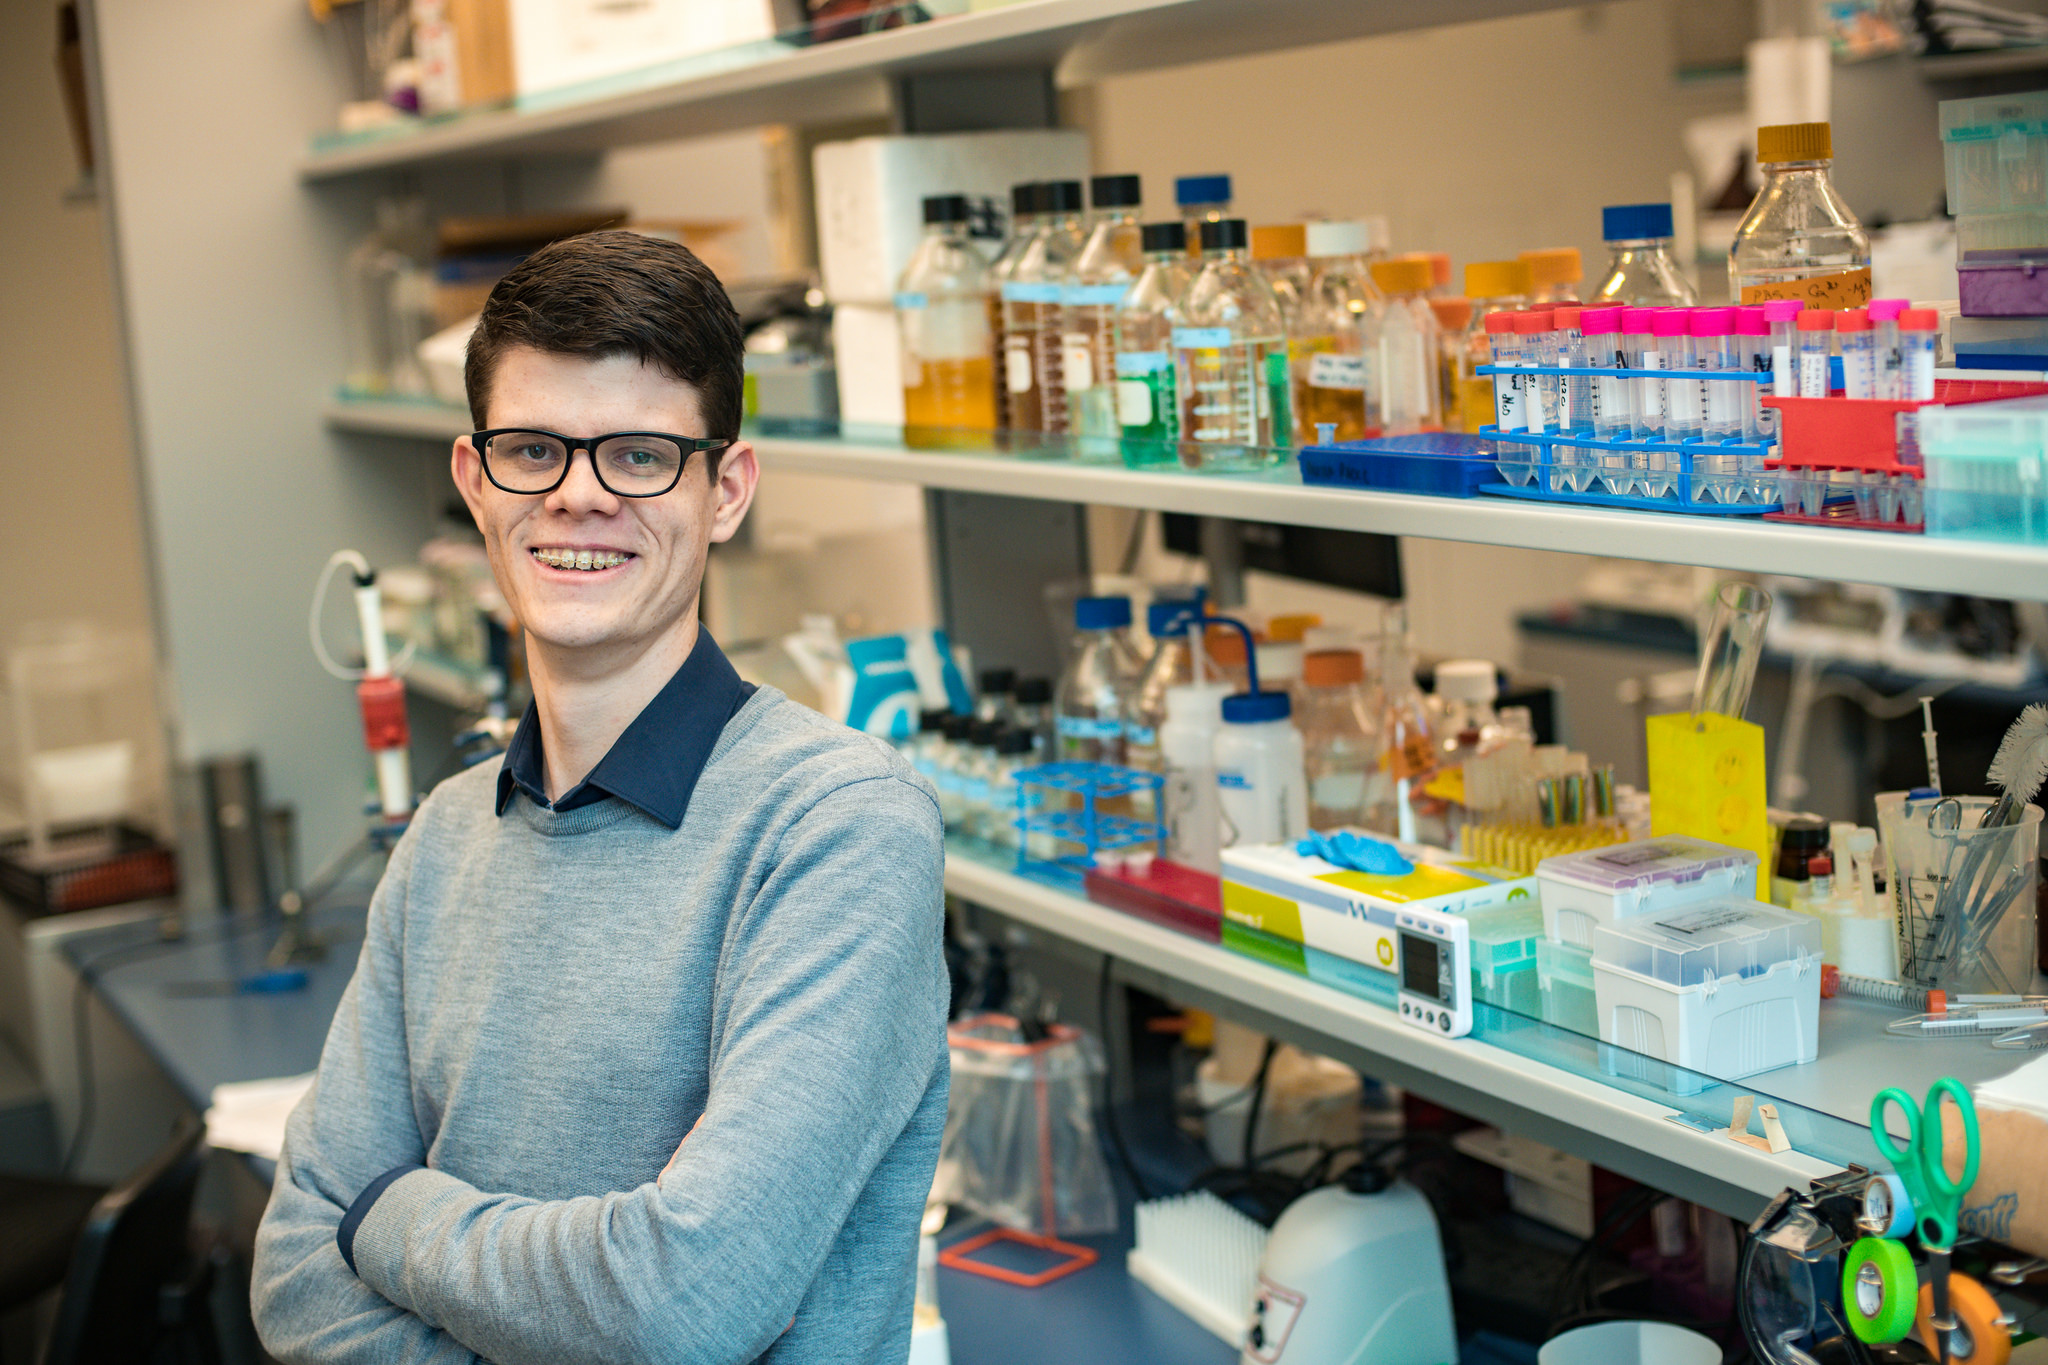 UFV Young Distinguished Alumni Andrew Alexander Winner Fights Scientific Battle Against Antibiotic Resistance